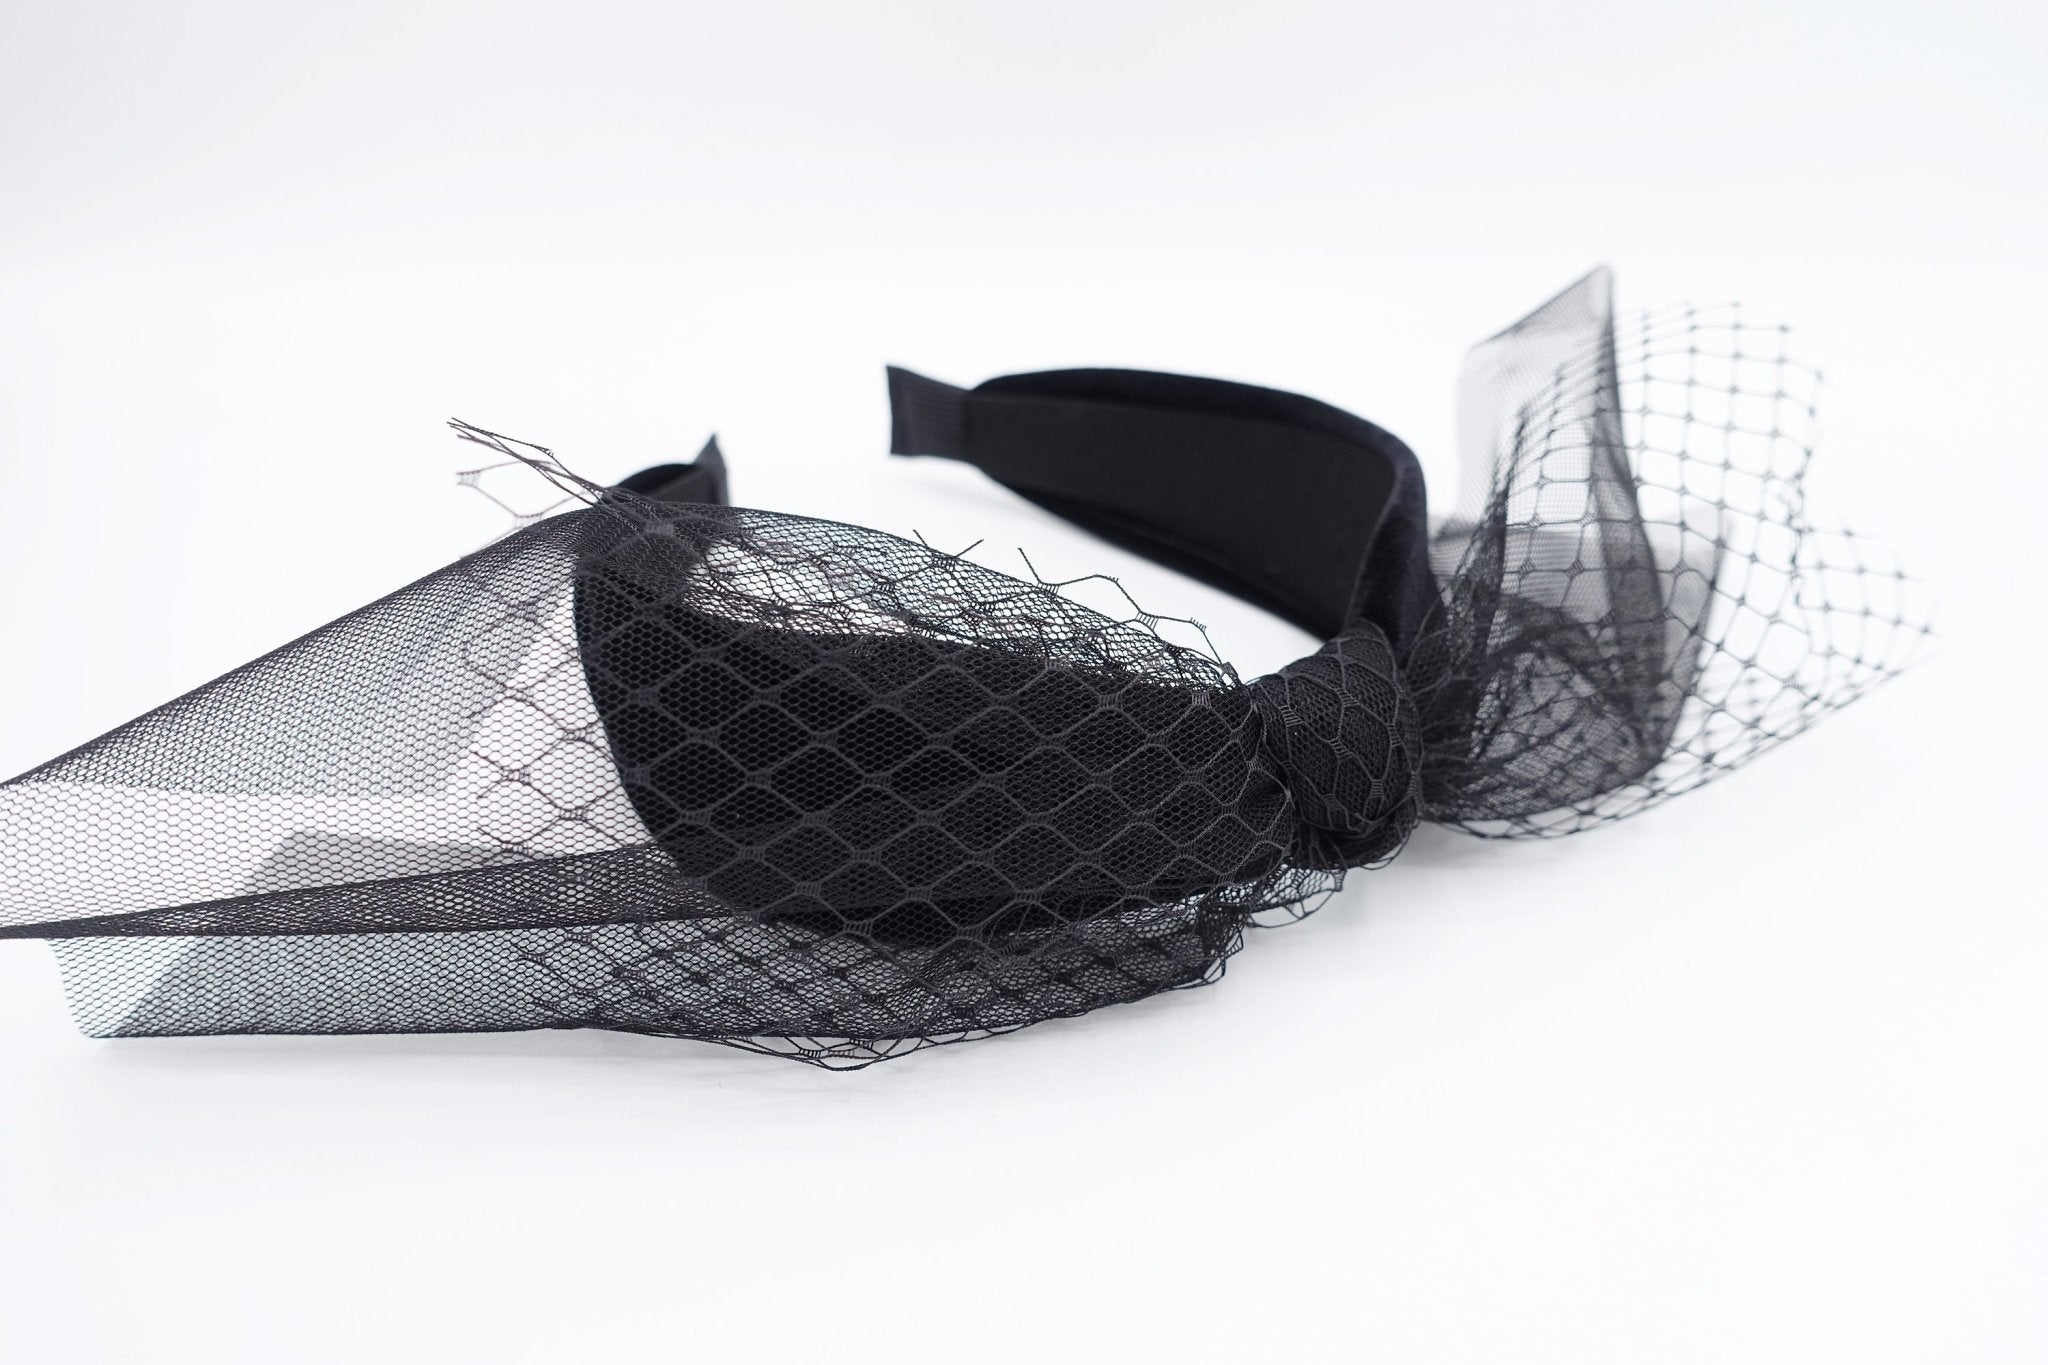 VeryShine hairband/headband black mesh veil bow knot headband fascinator hairband